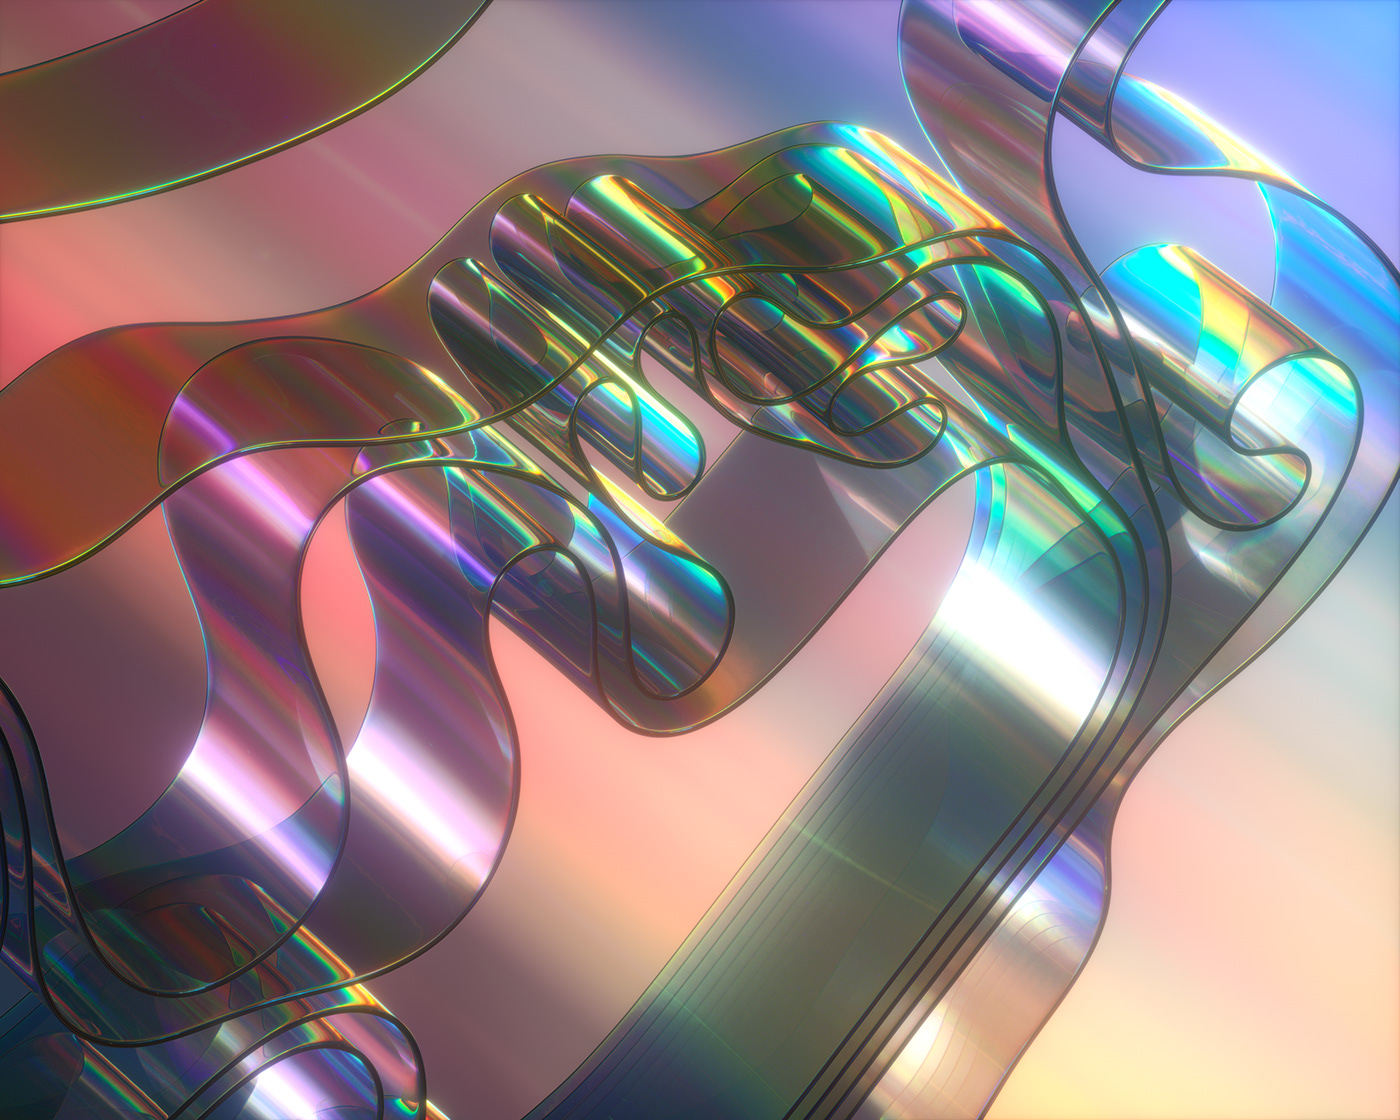 cinema 4d simulation glass iridescent abstract Digital Art  ILLUSTRATION  vibrant colorful